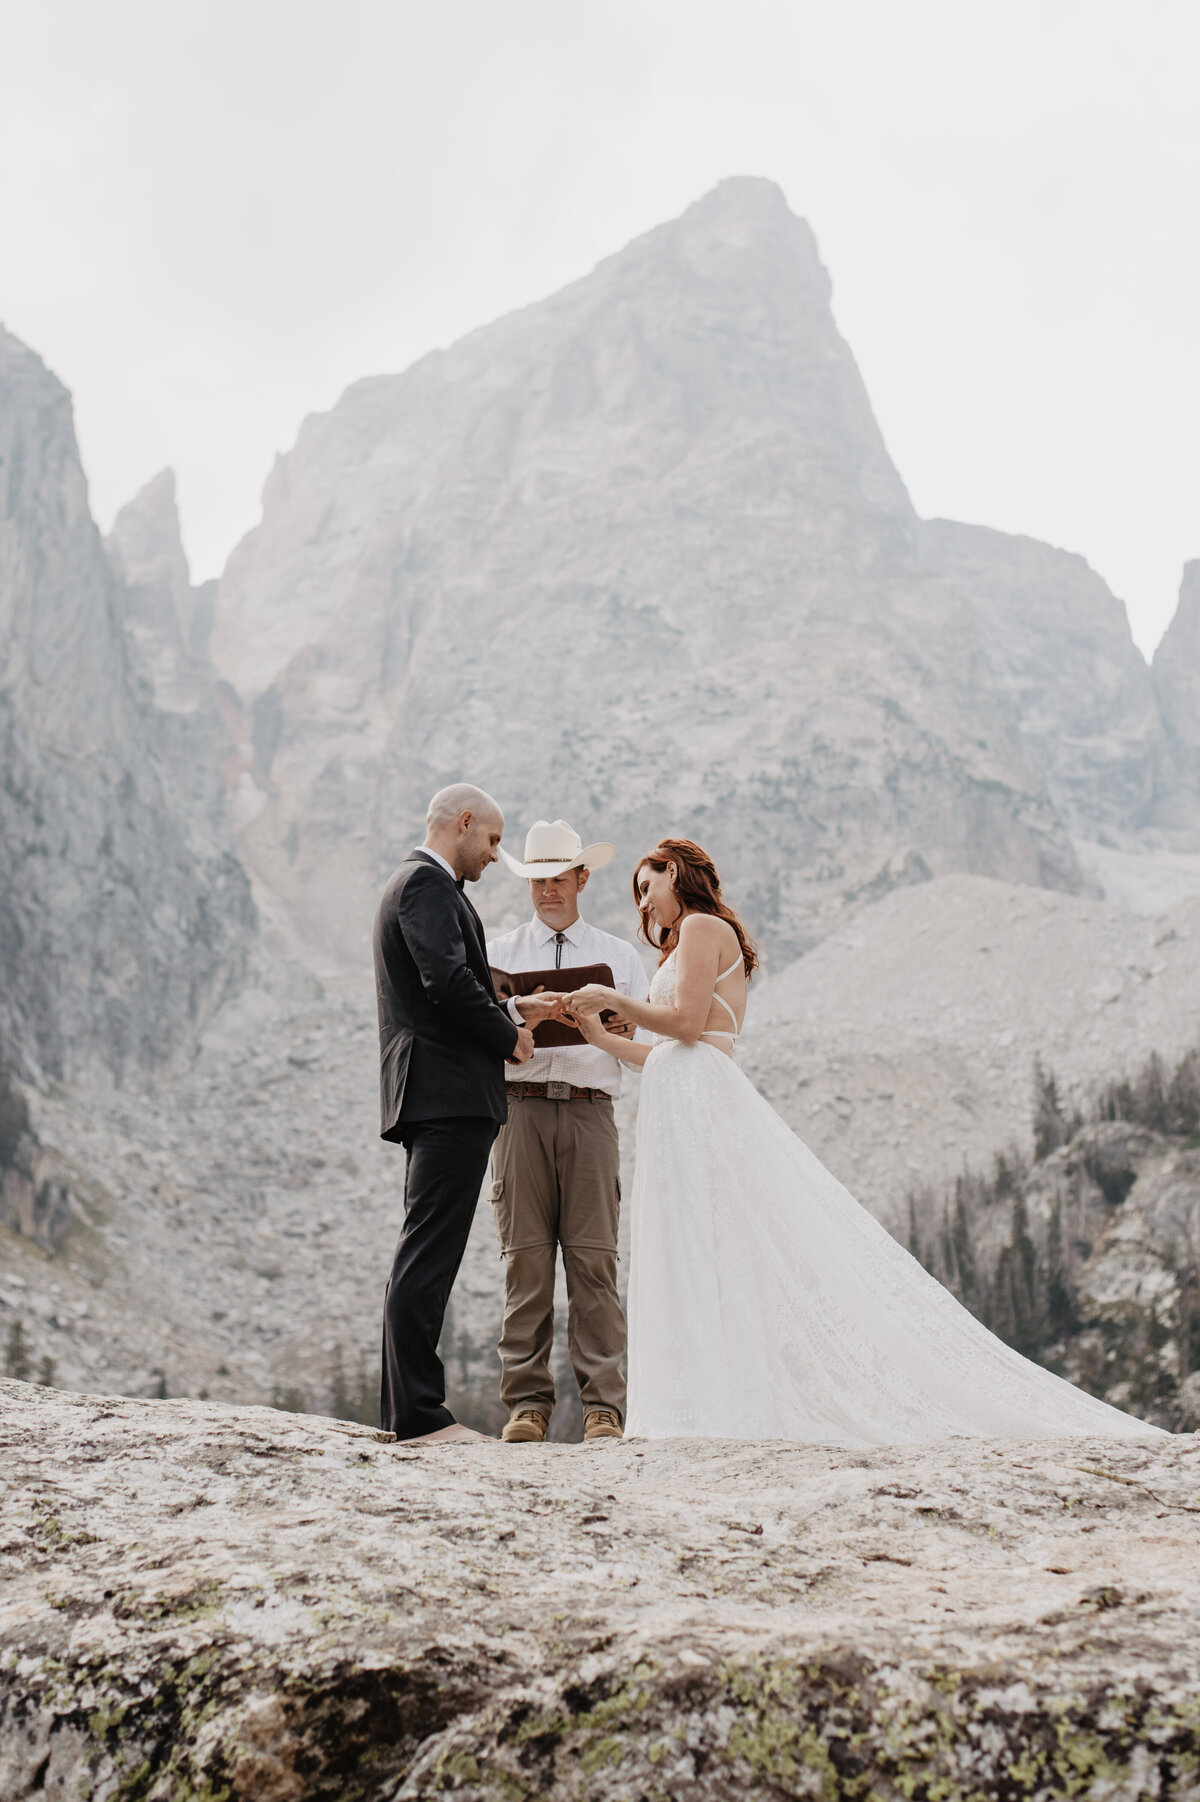 Jackson Hole photographers capture bride putting ring on groom